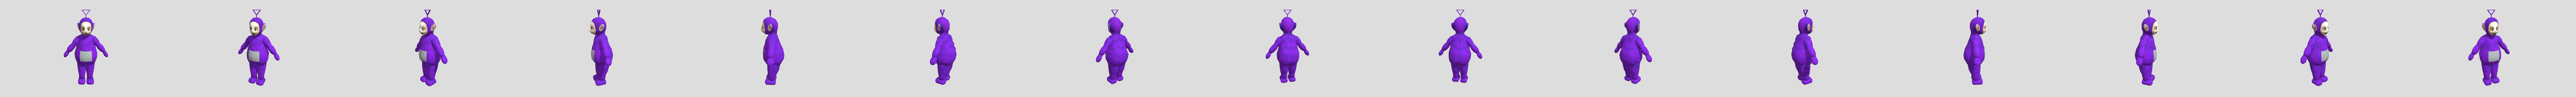 Slendytubbies - Tinky Winky - Download Free 3D model by Dani (@Dani_.-.)  [c347283]